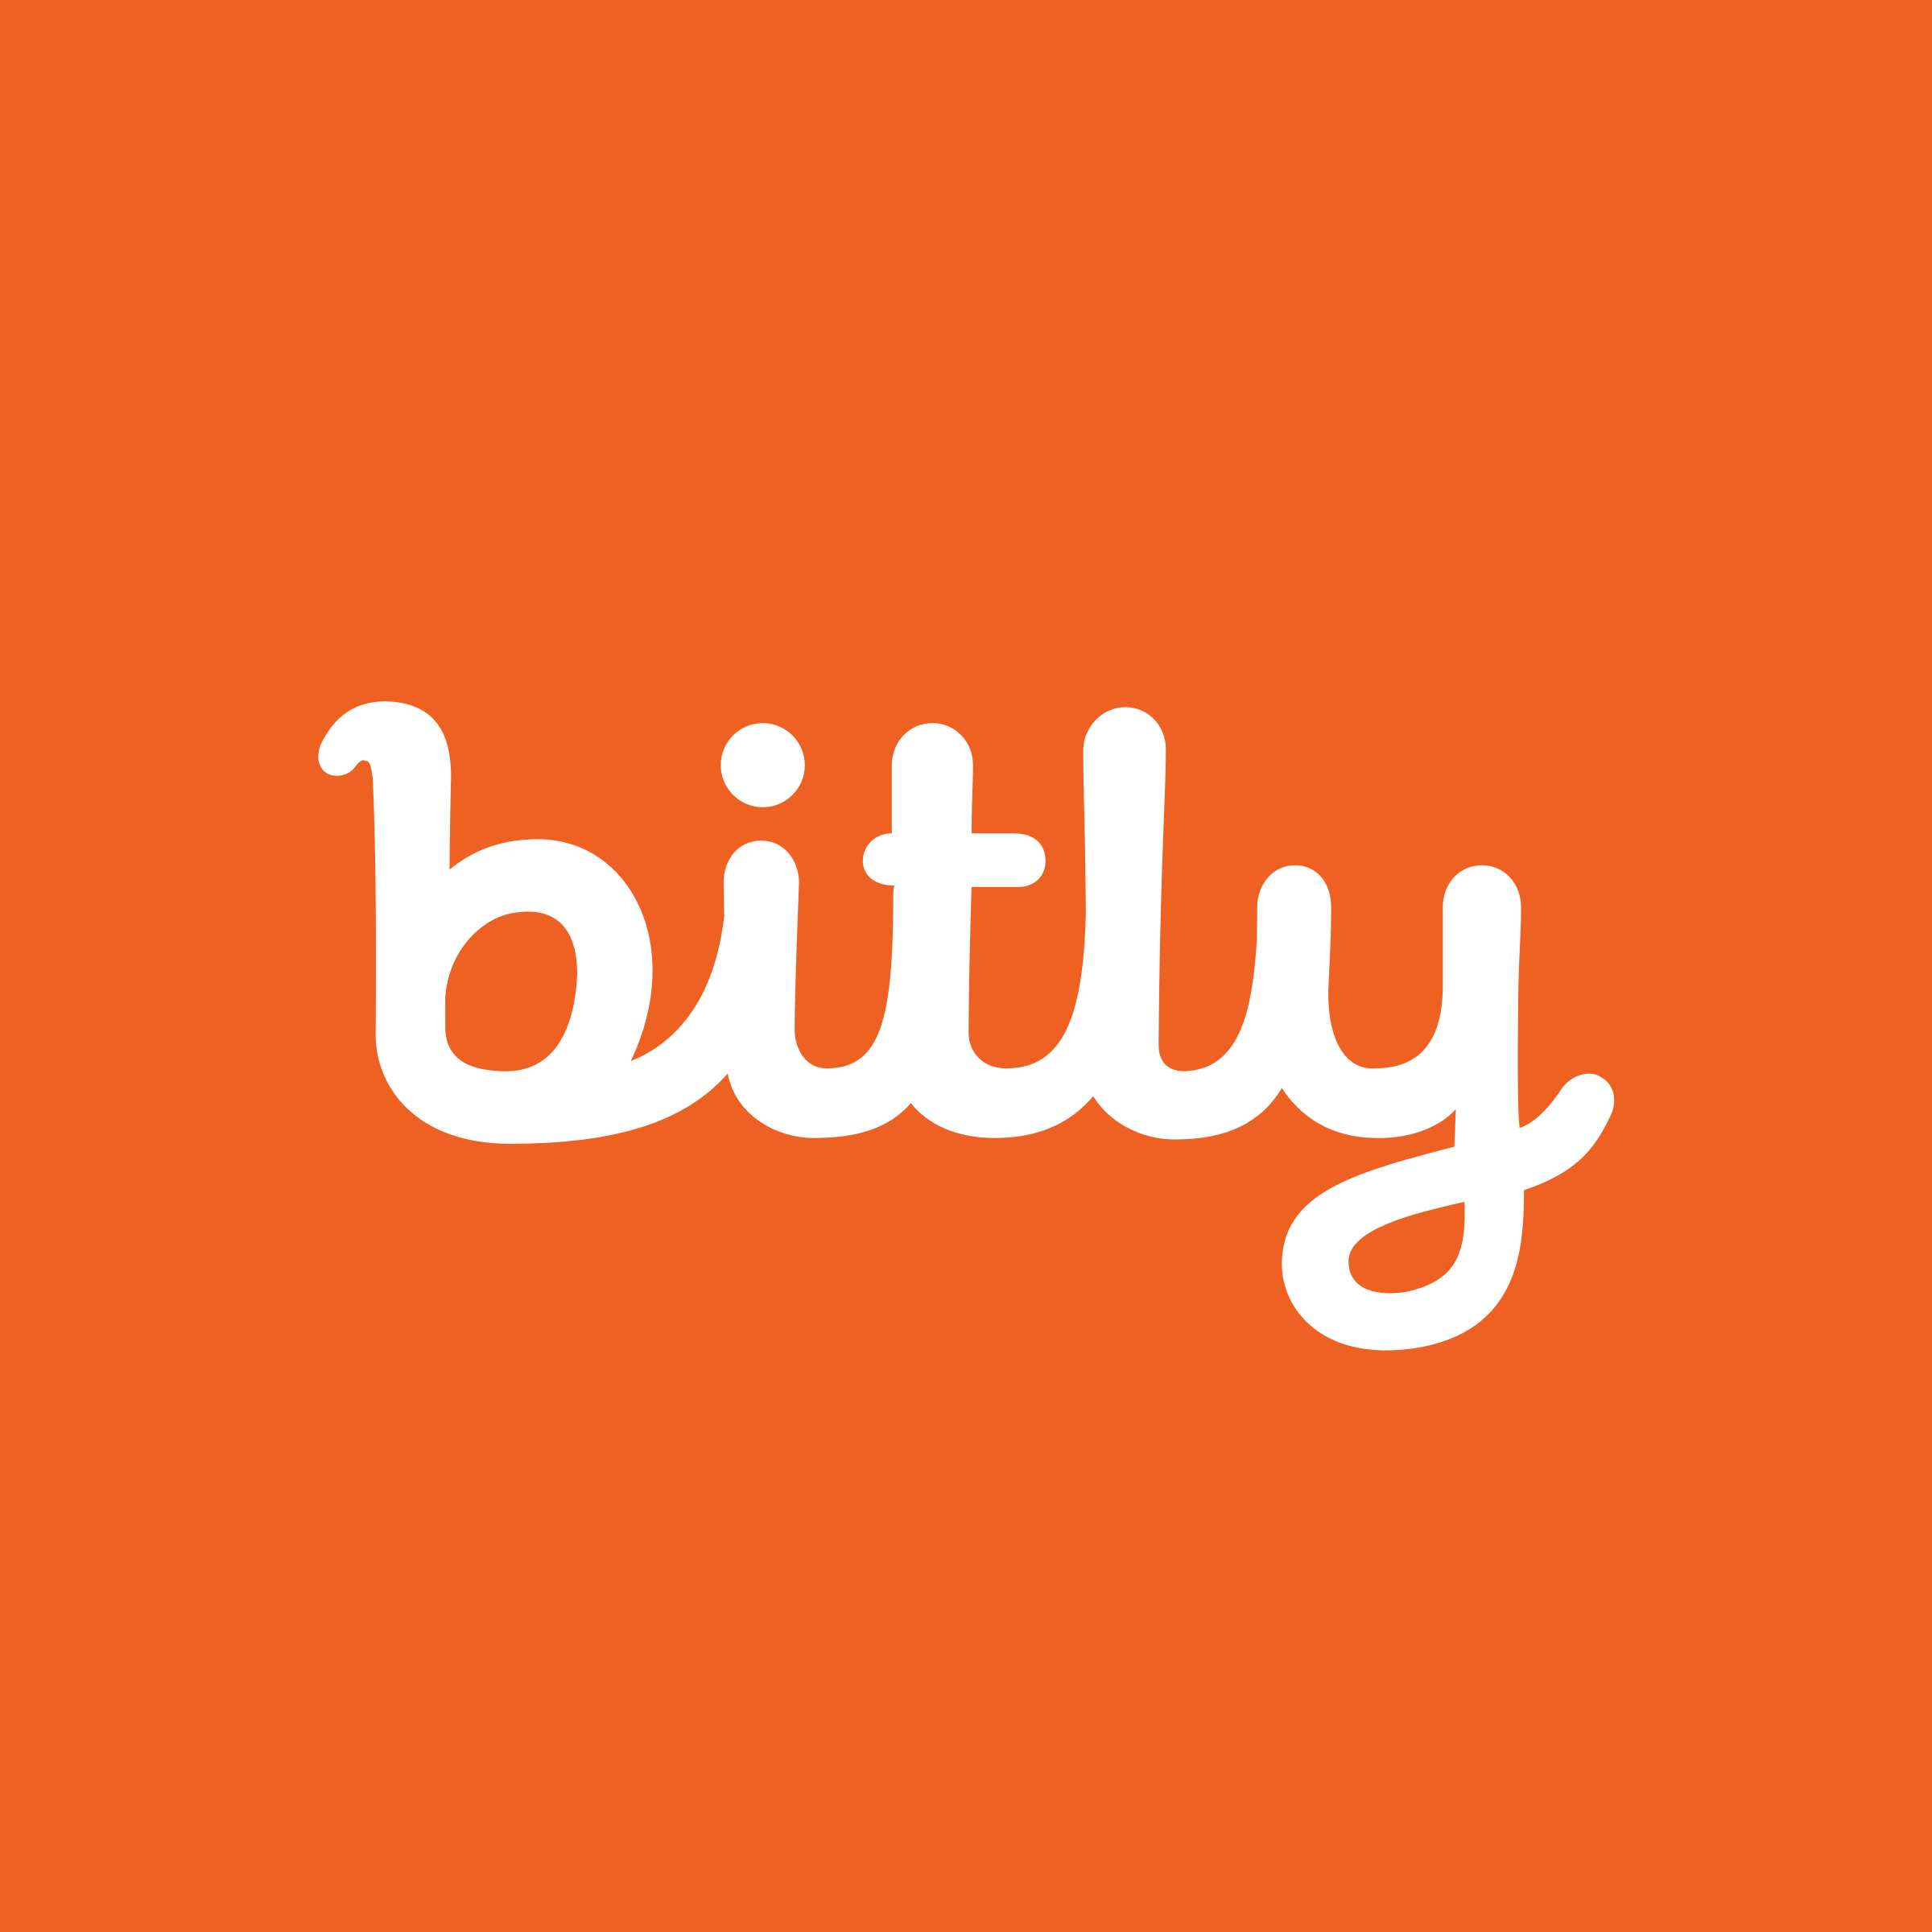 Bit.ly Logo - Bitly